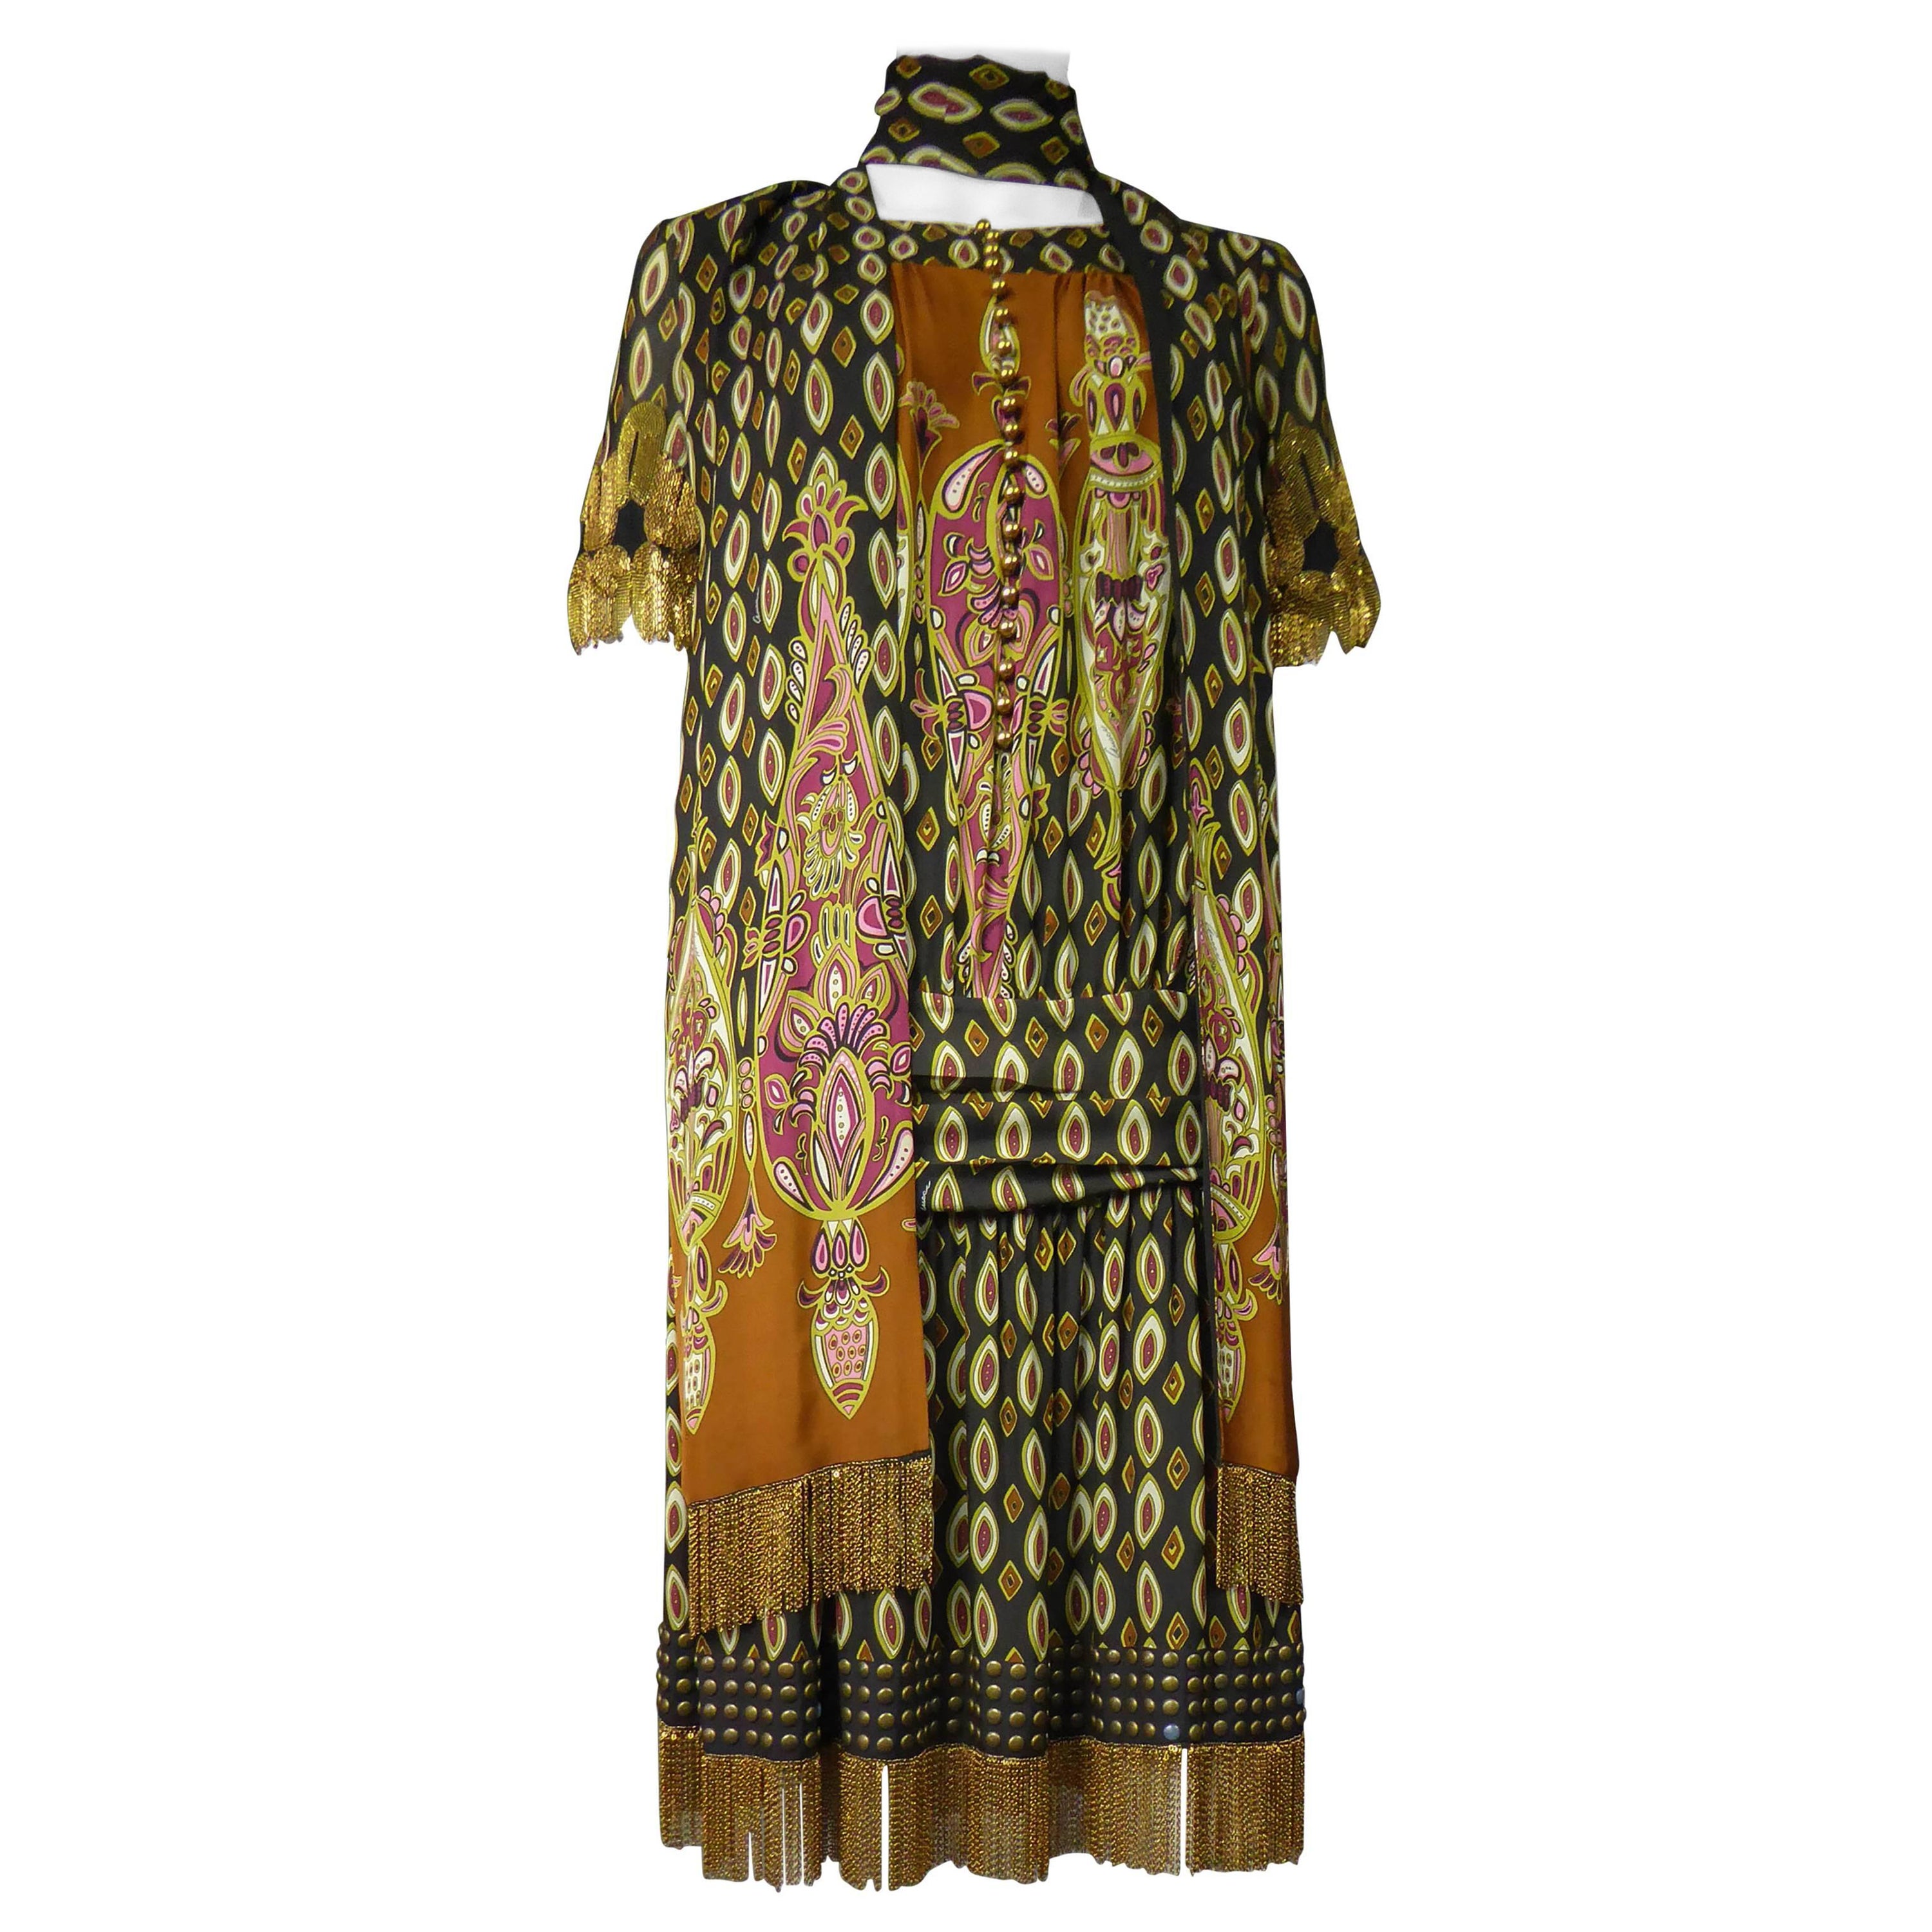 Bedrucktes Gucci-Kleid aus Seide Herbst / Winter 2008 - 2009